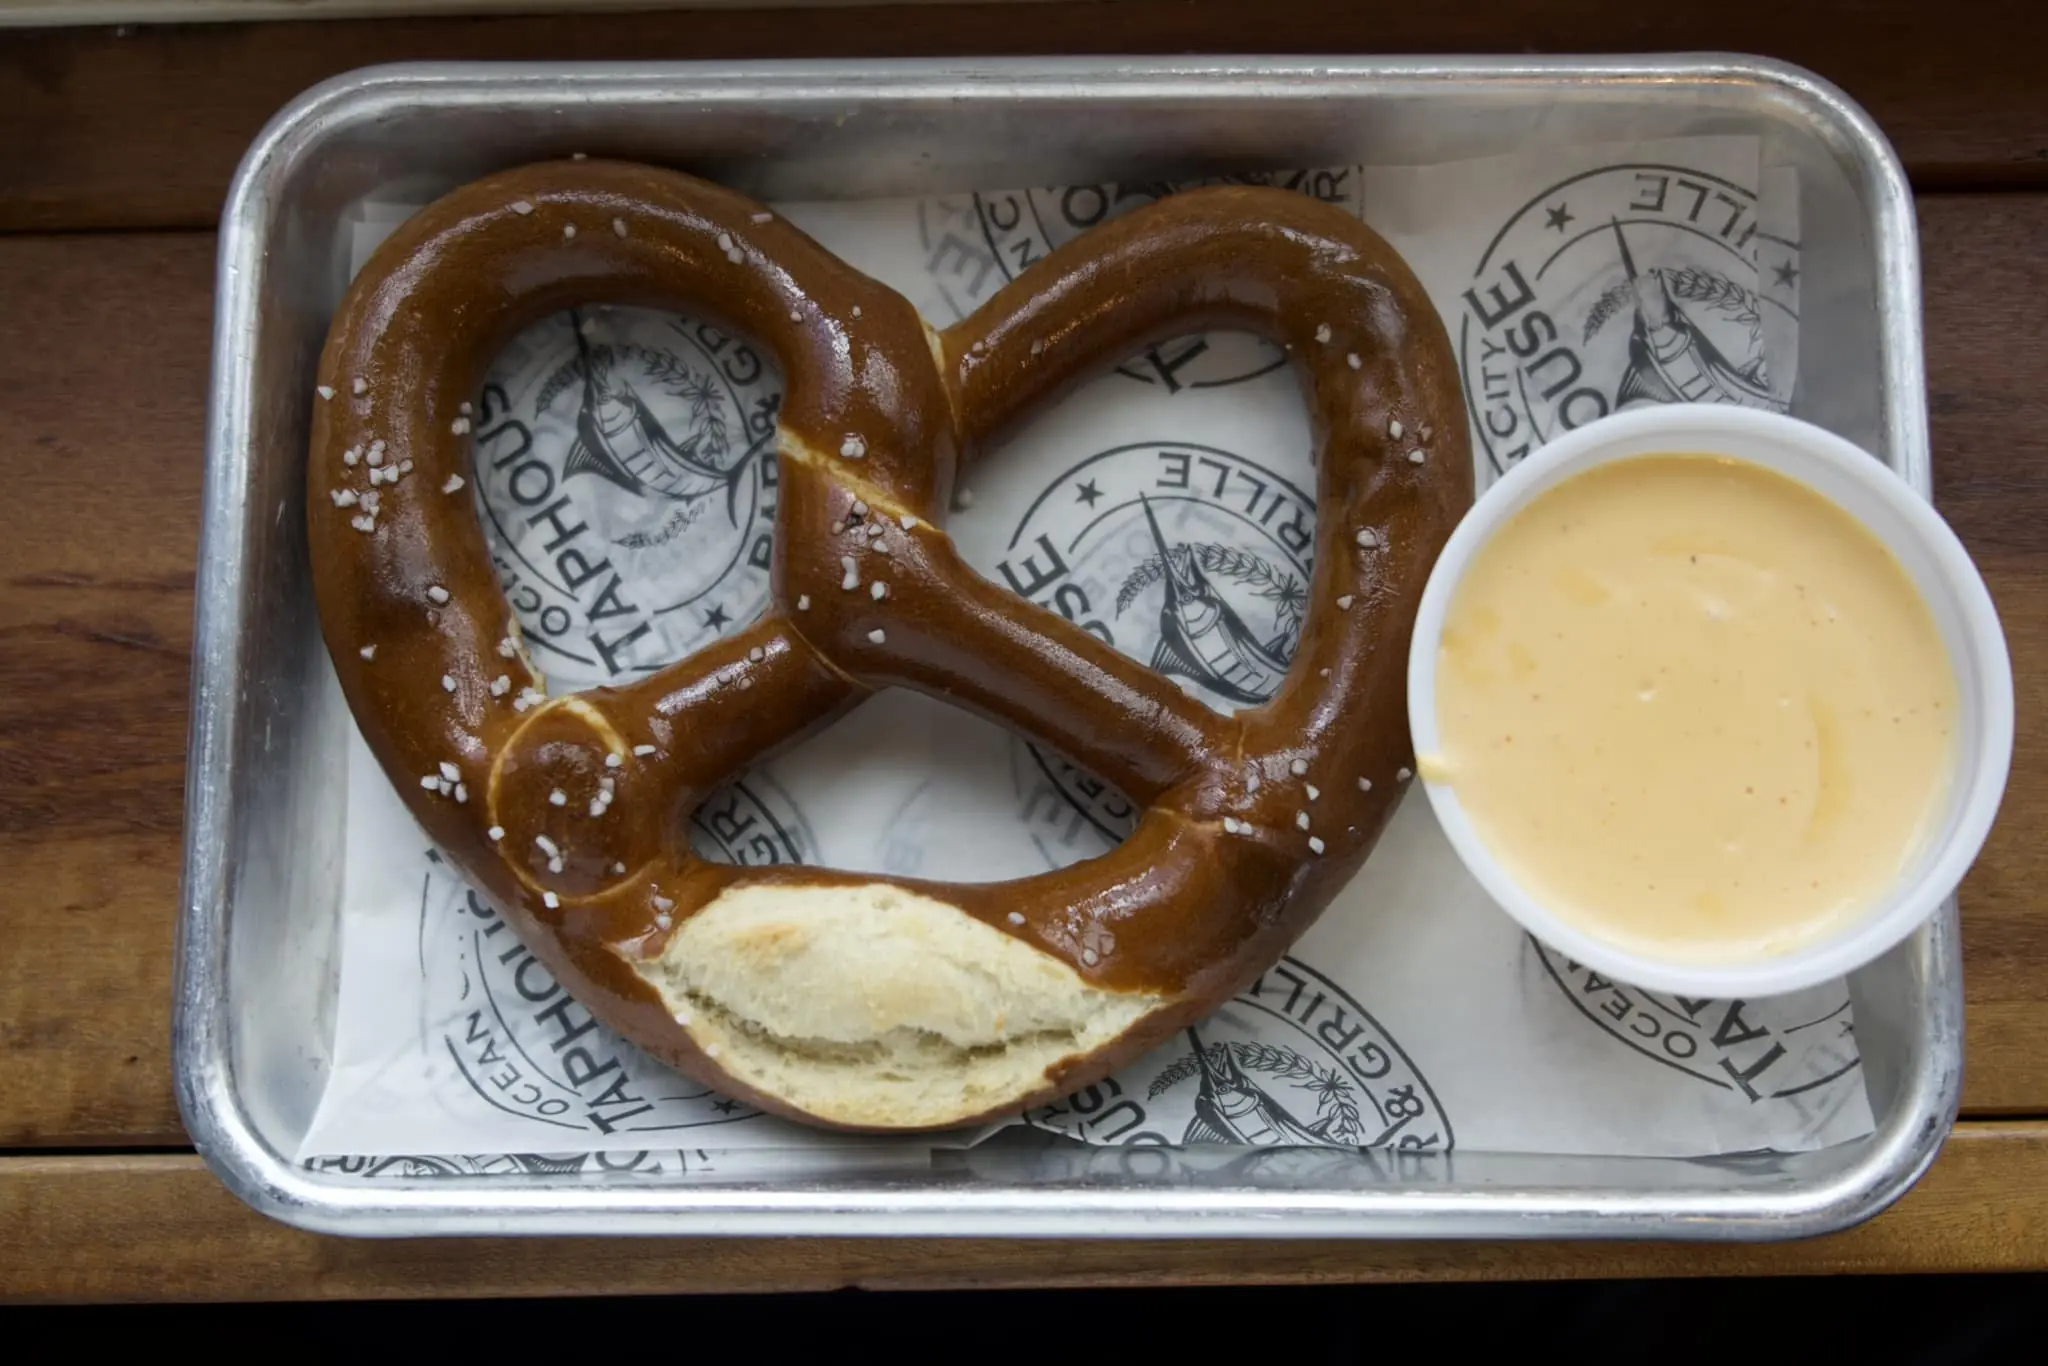 a pretzel shaped like a heart and a cup of coffee